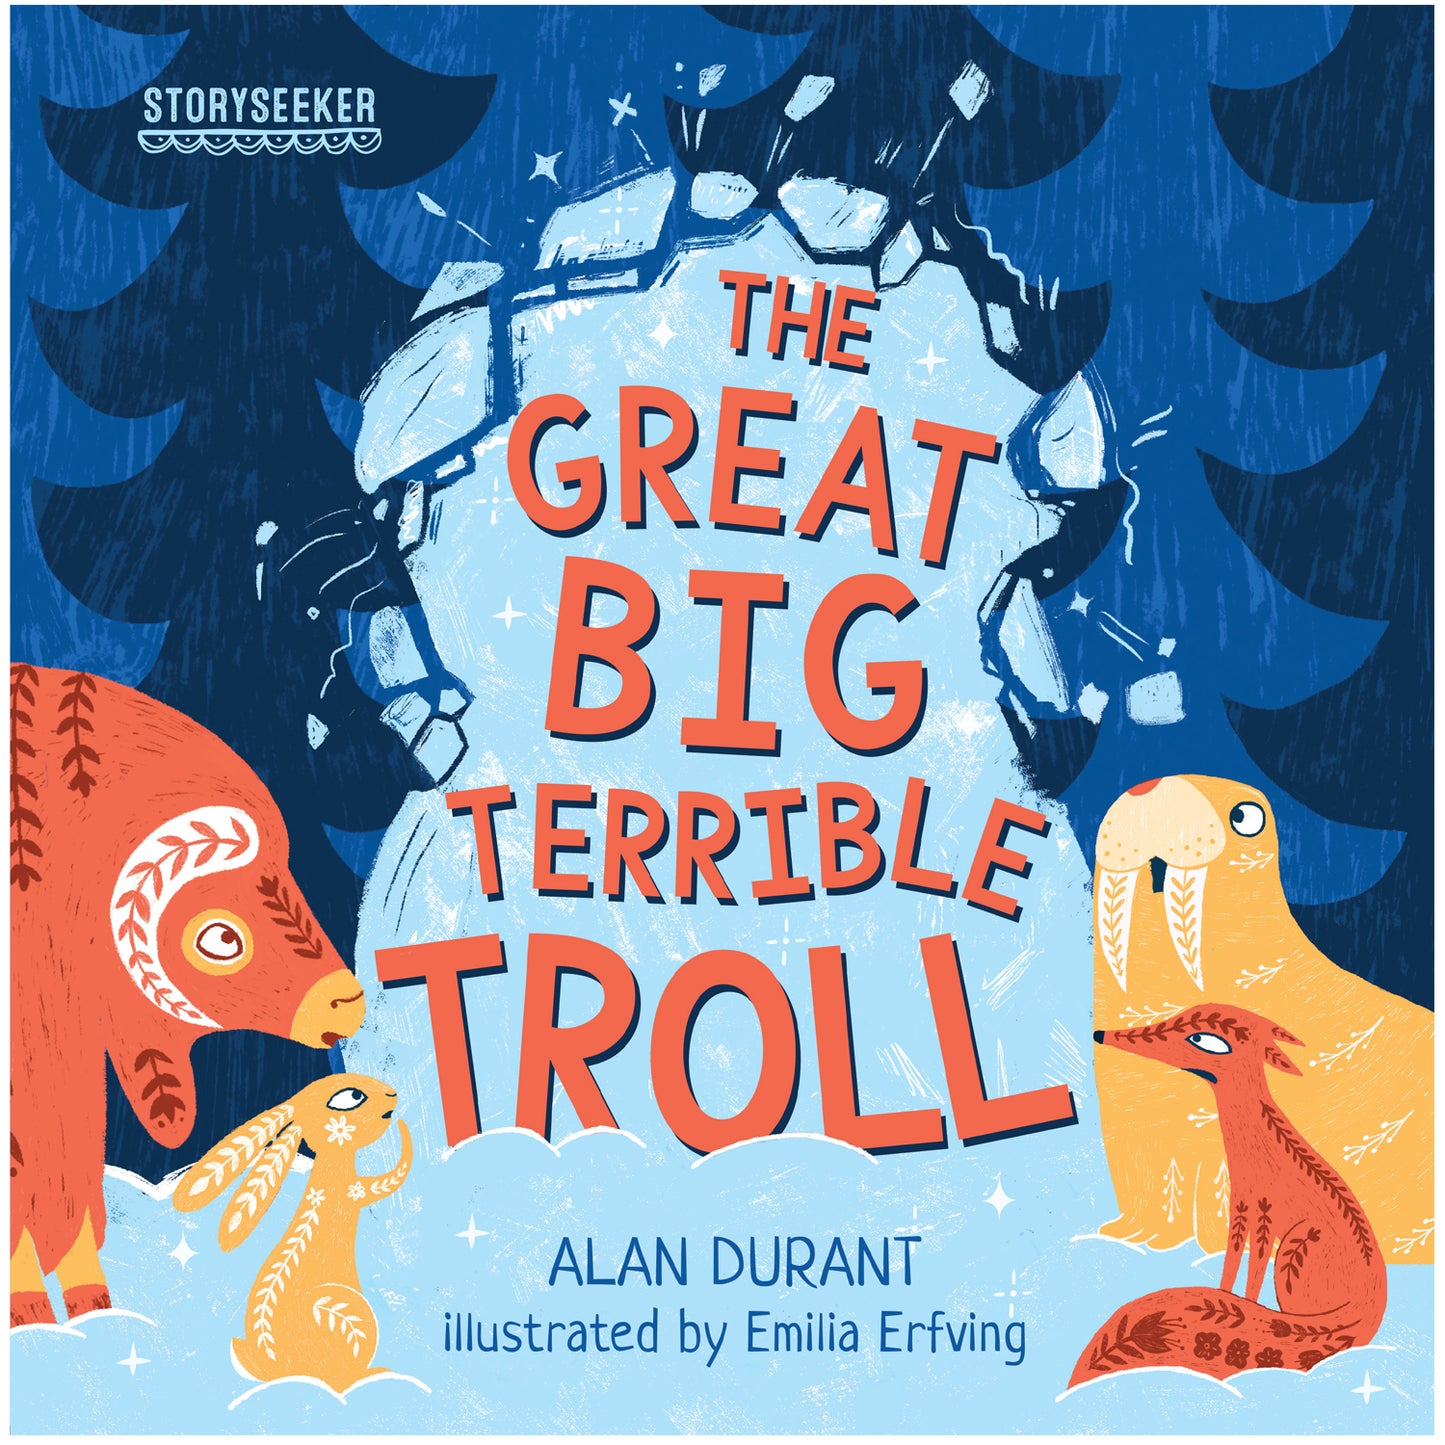 The Great Big Terrible Troll| Storyseeker | Toran Press | Picture Book | Nordic folk art | Children's Storybook | Books for kids Alan Durant and Emilia Erfving